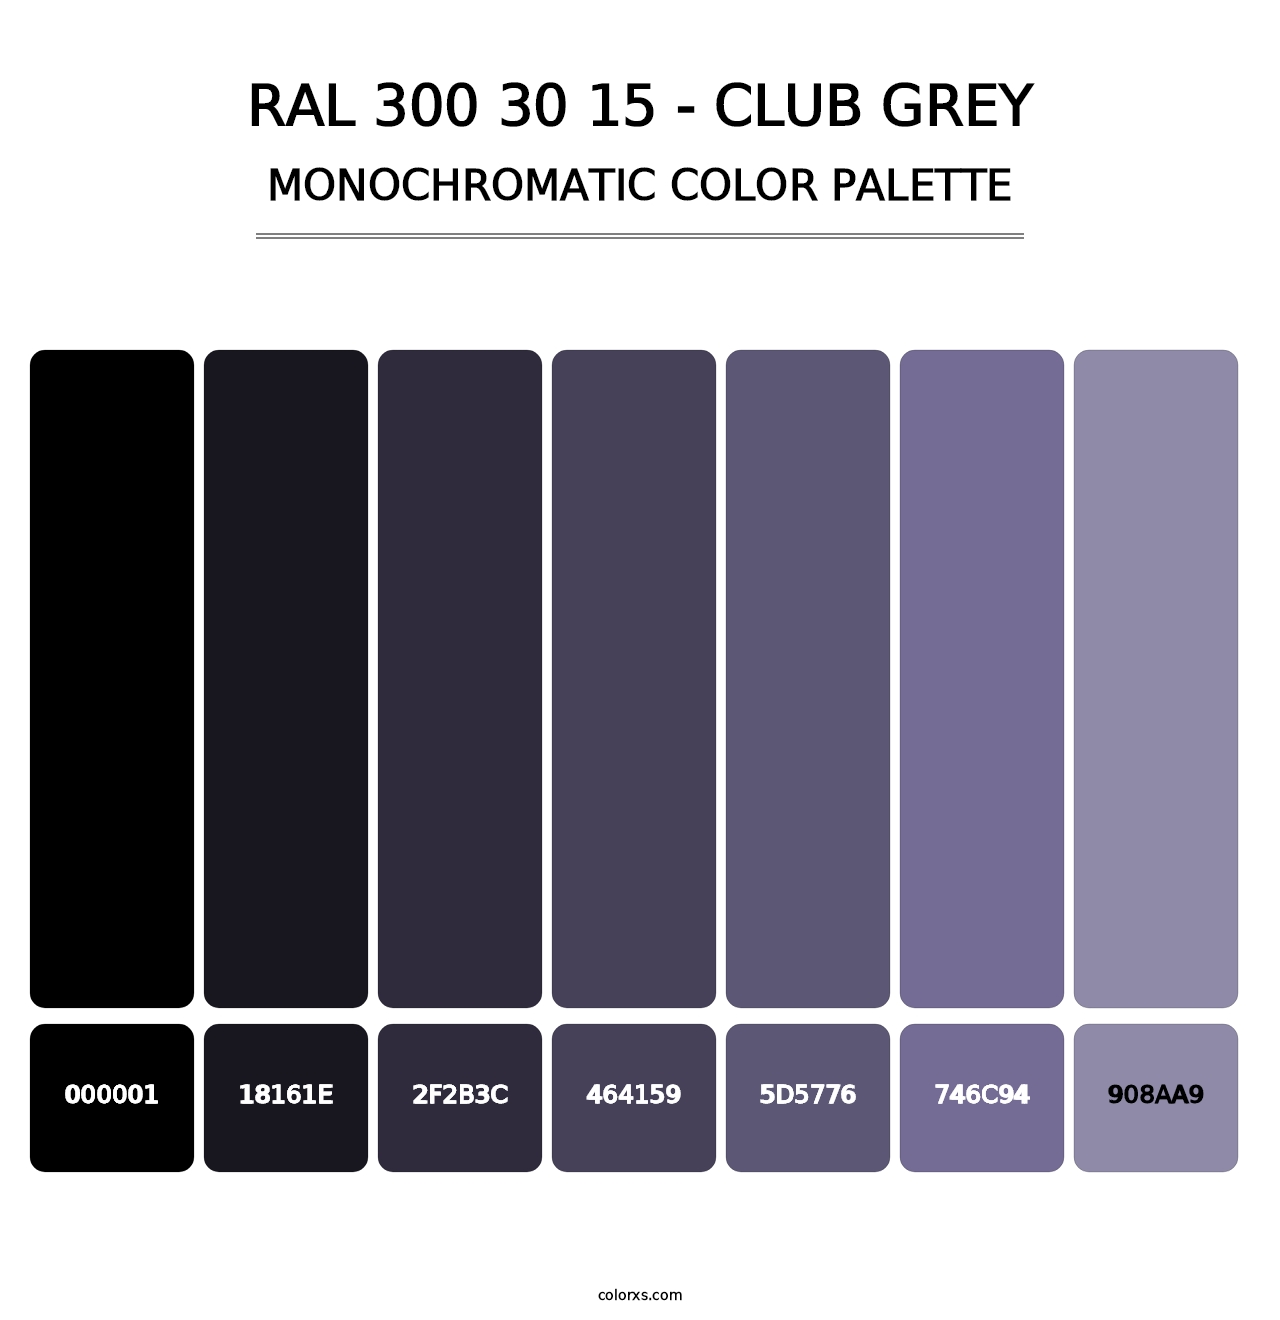 RAL 300 30 15 - Club Grey - Monochromatic Color Palette